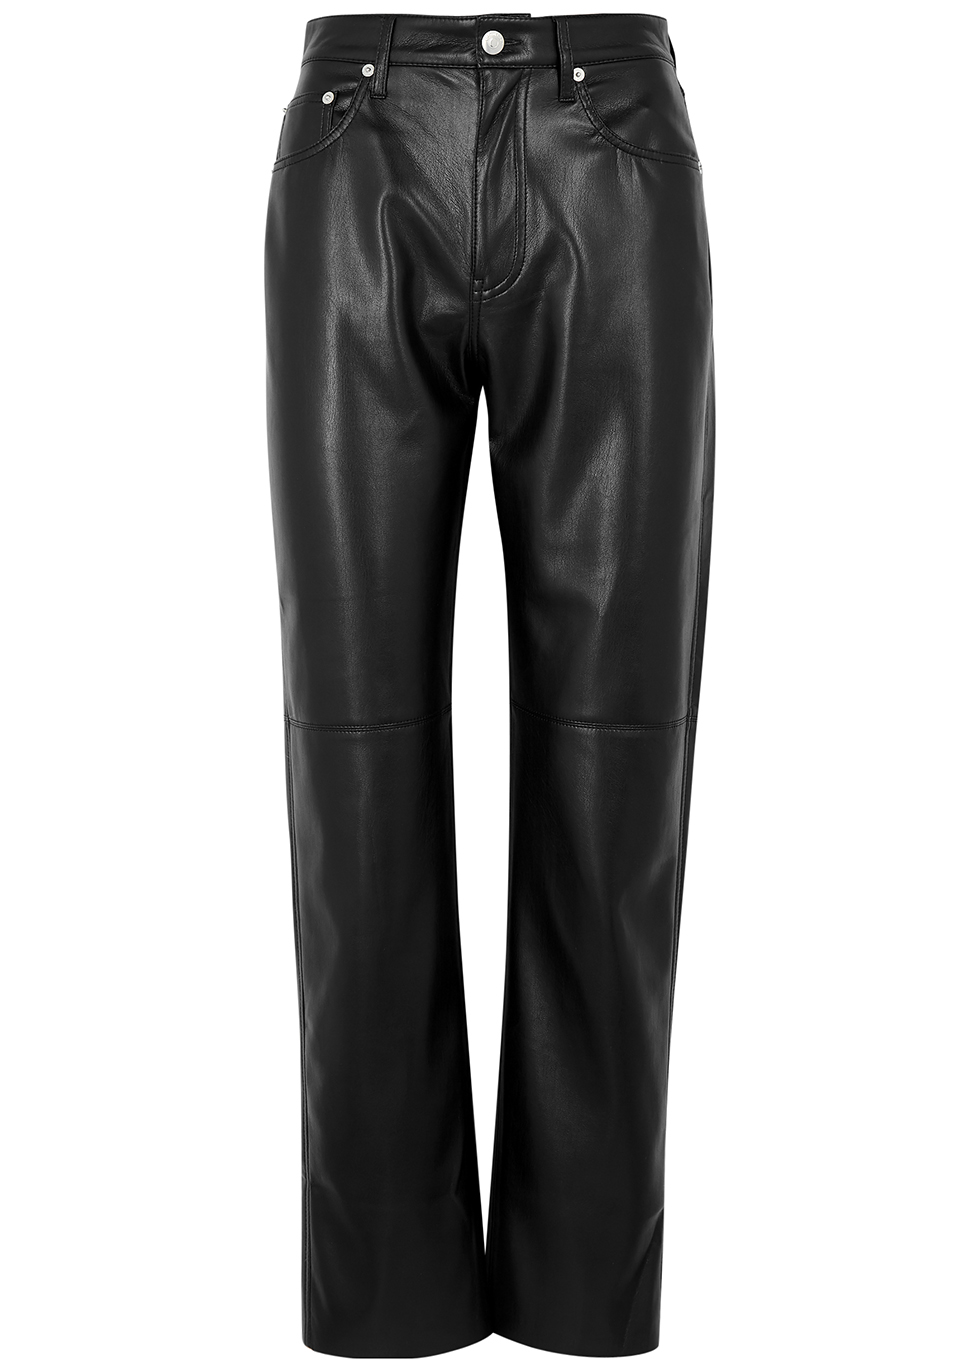 Vinni black faux leather trousers